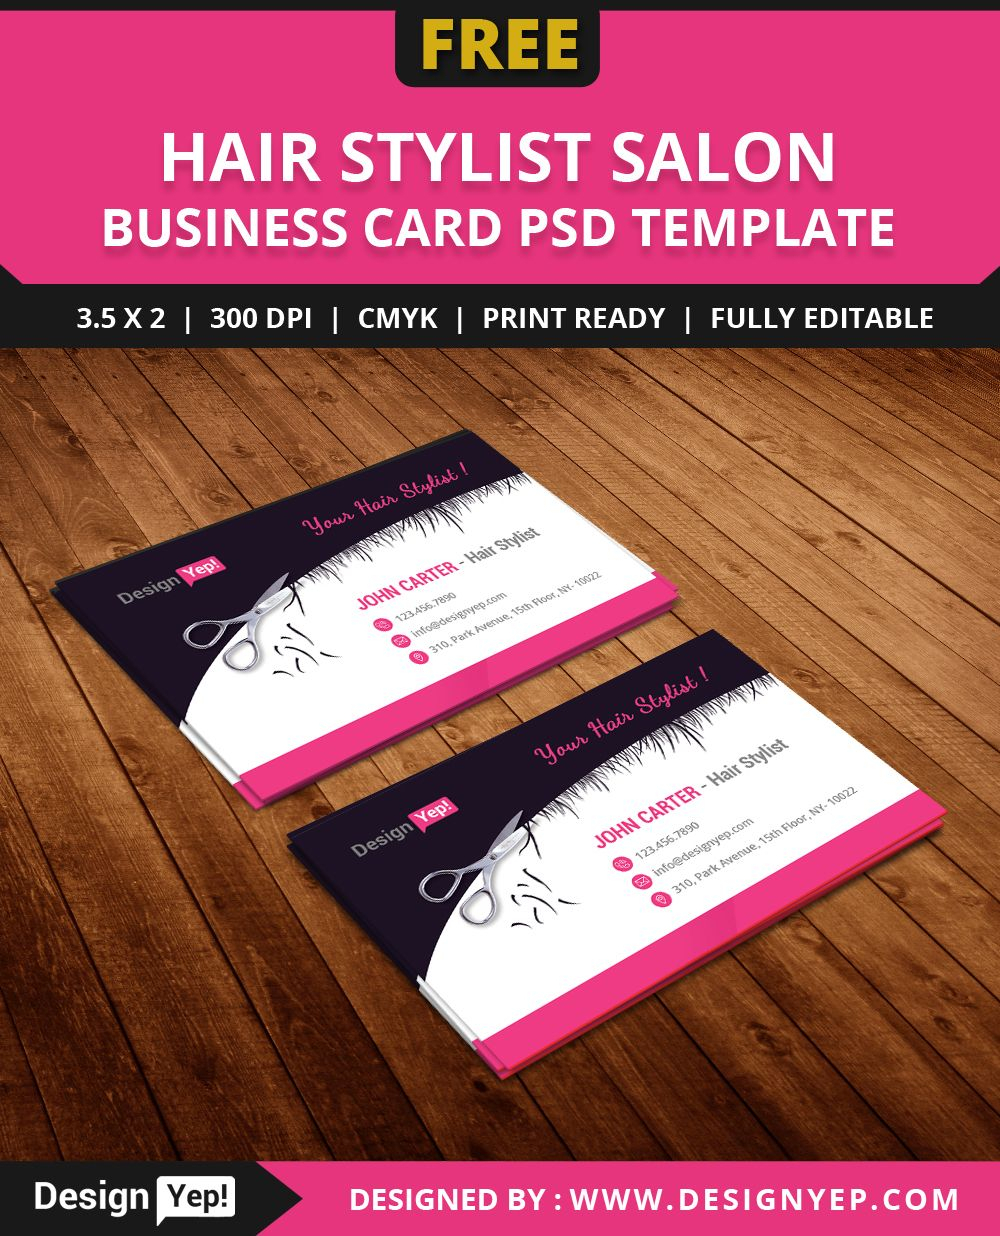 Free Hair Stylist Salon Business Card Template Psd | Salon For Hair Salon Business Card Template